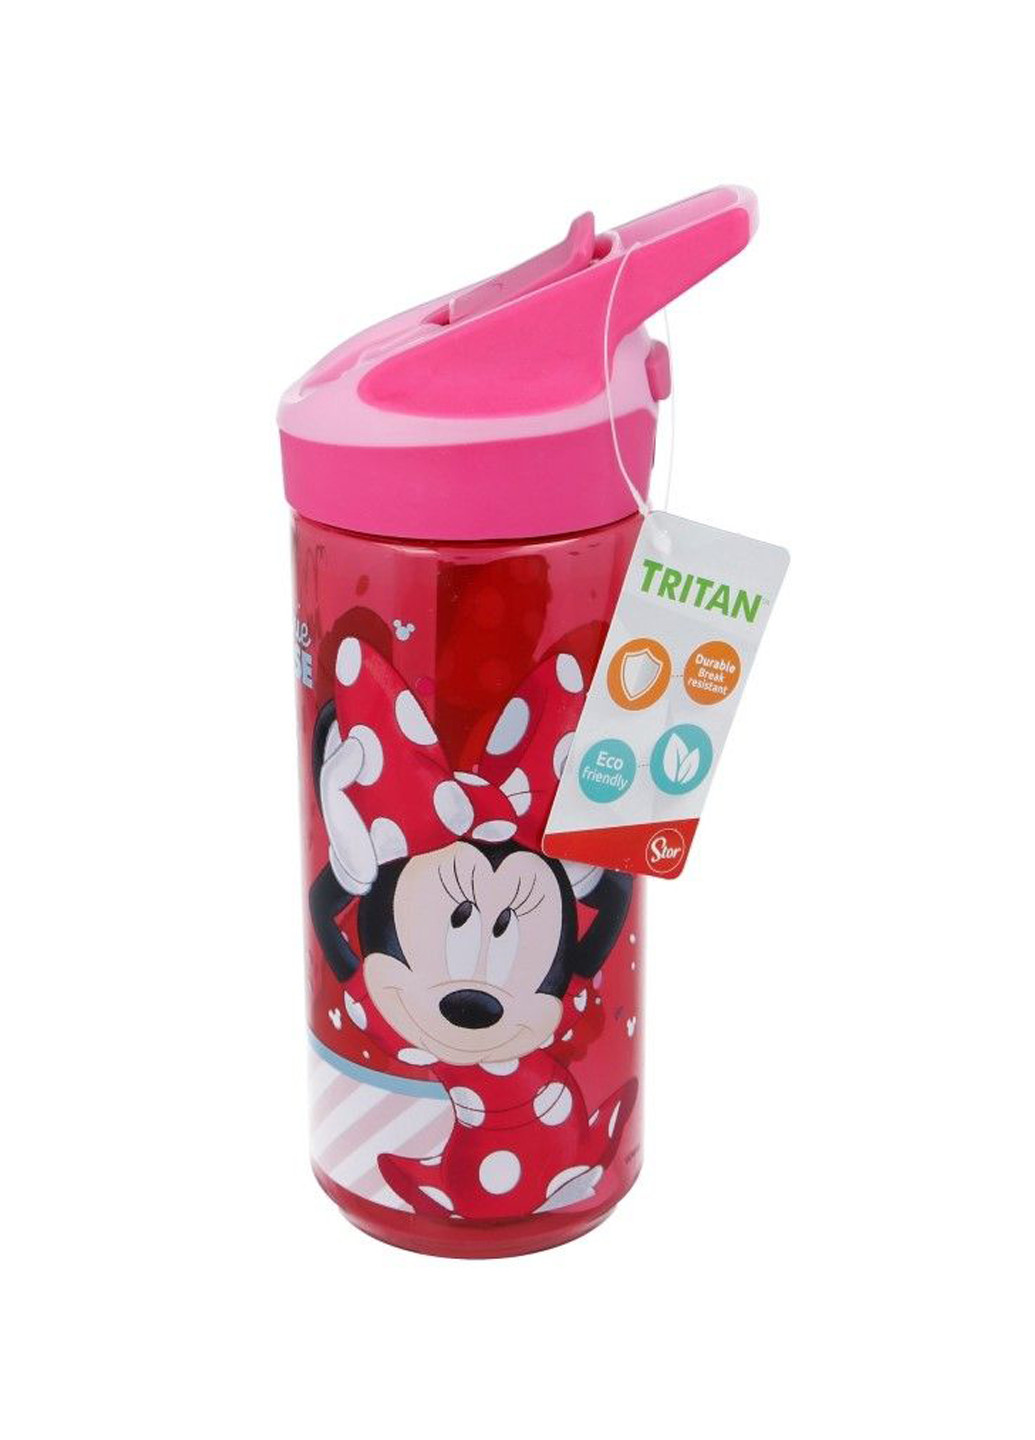 Пляшка Disney - Minnie Mouse Electric Doll, 620 мл Stor (201089872)